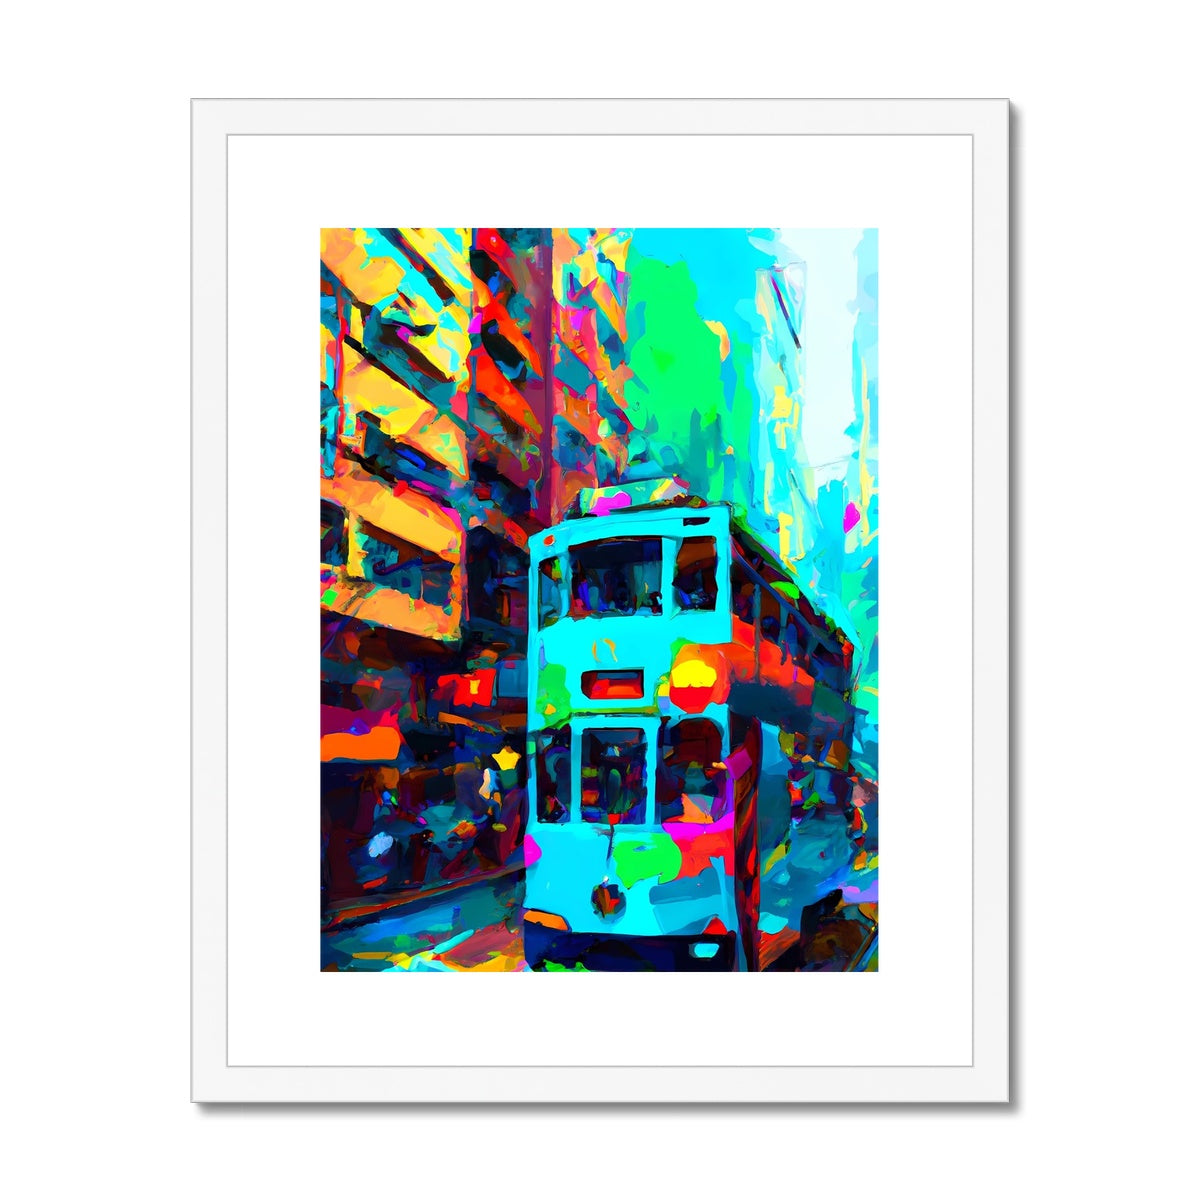 Hong Kong Impressions - Tram Framed & Mounted Print